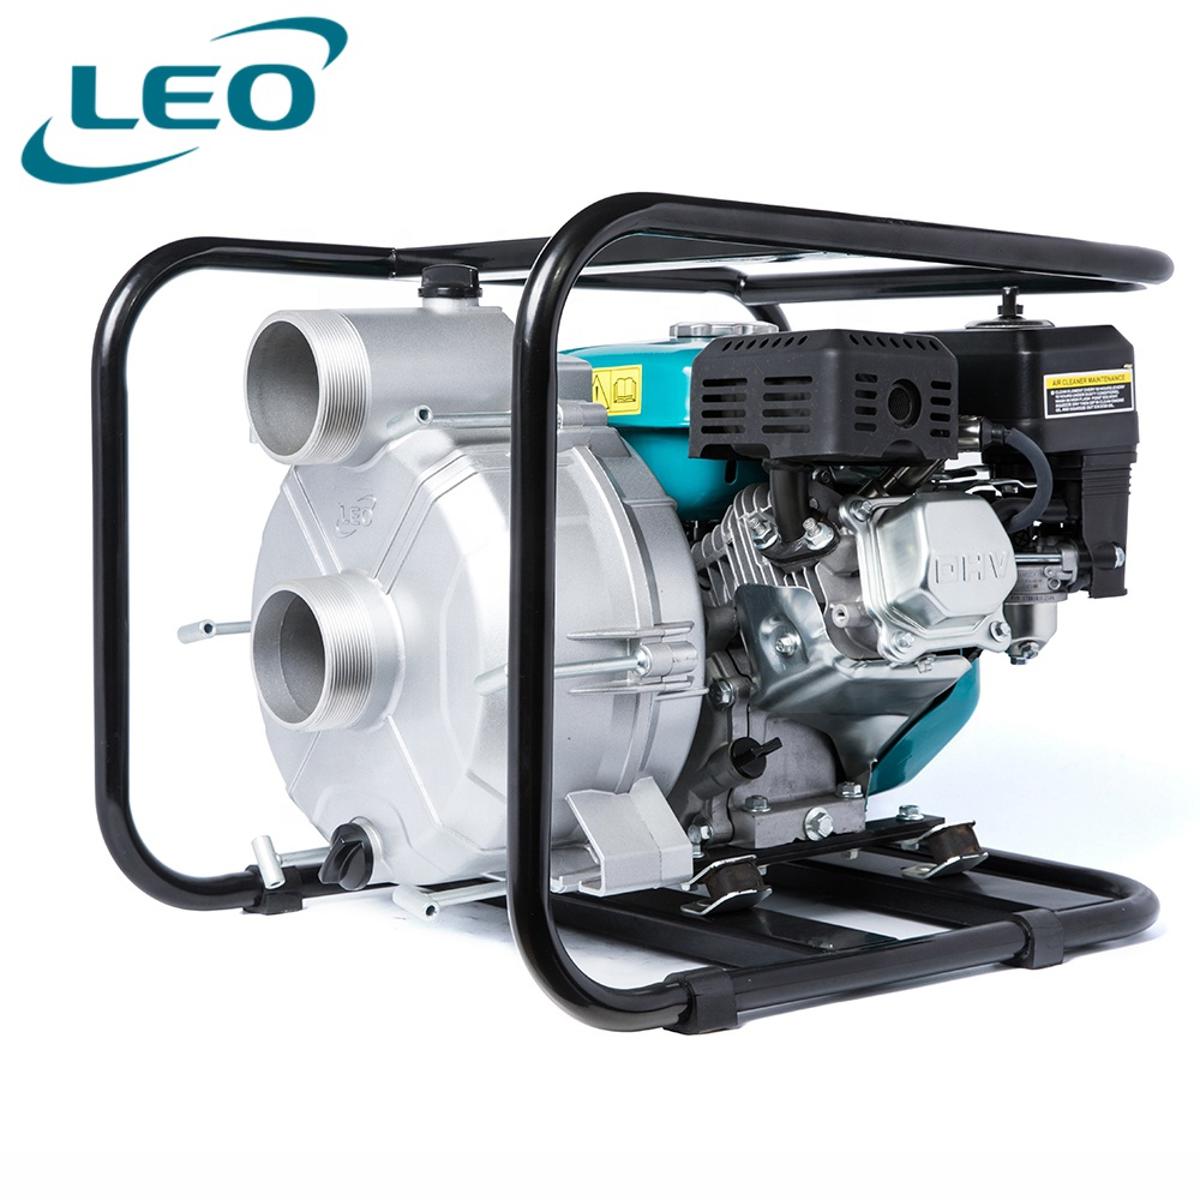 LEO - LGP-30W - 196cc - 6.5 HP 4 STROKE PETROL ENGINE Sewage Water Pump SIZE :- 3" x 3"  - European STANDARD